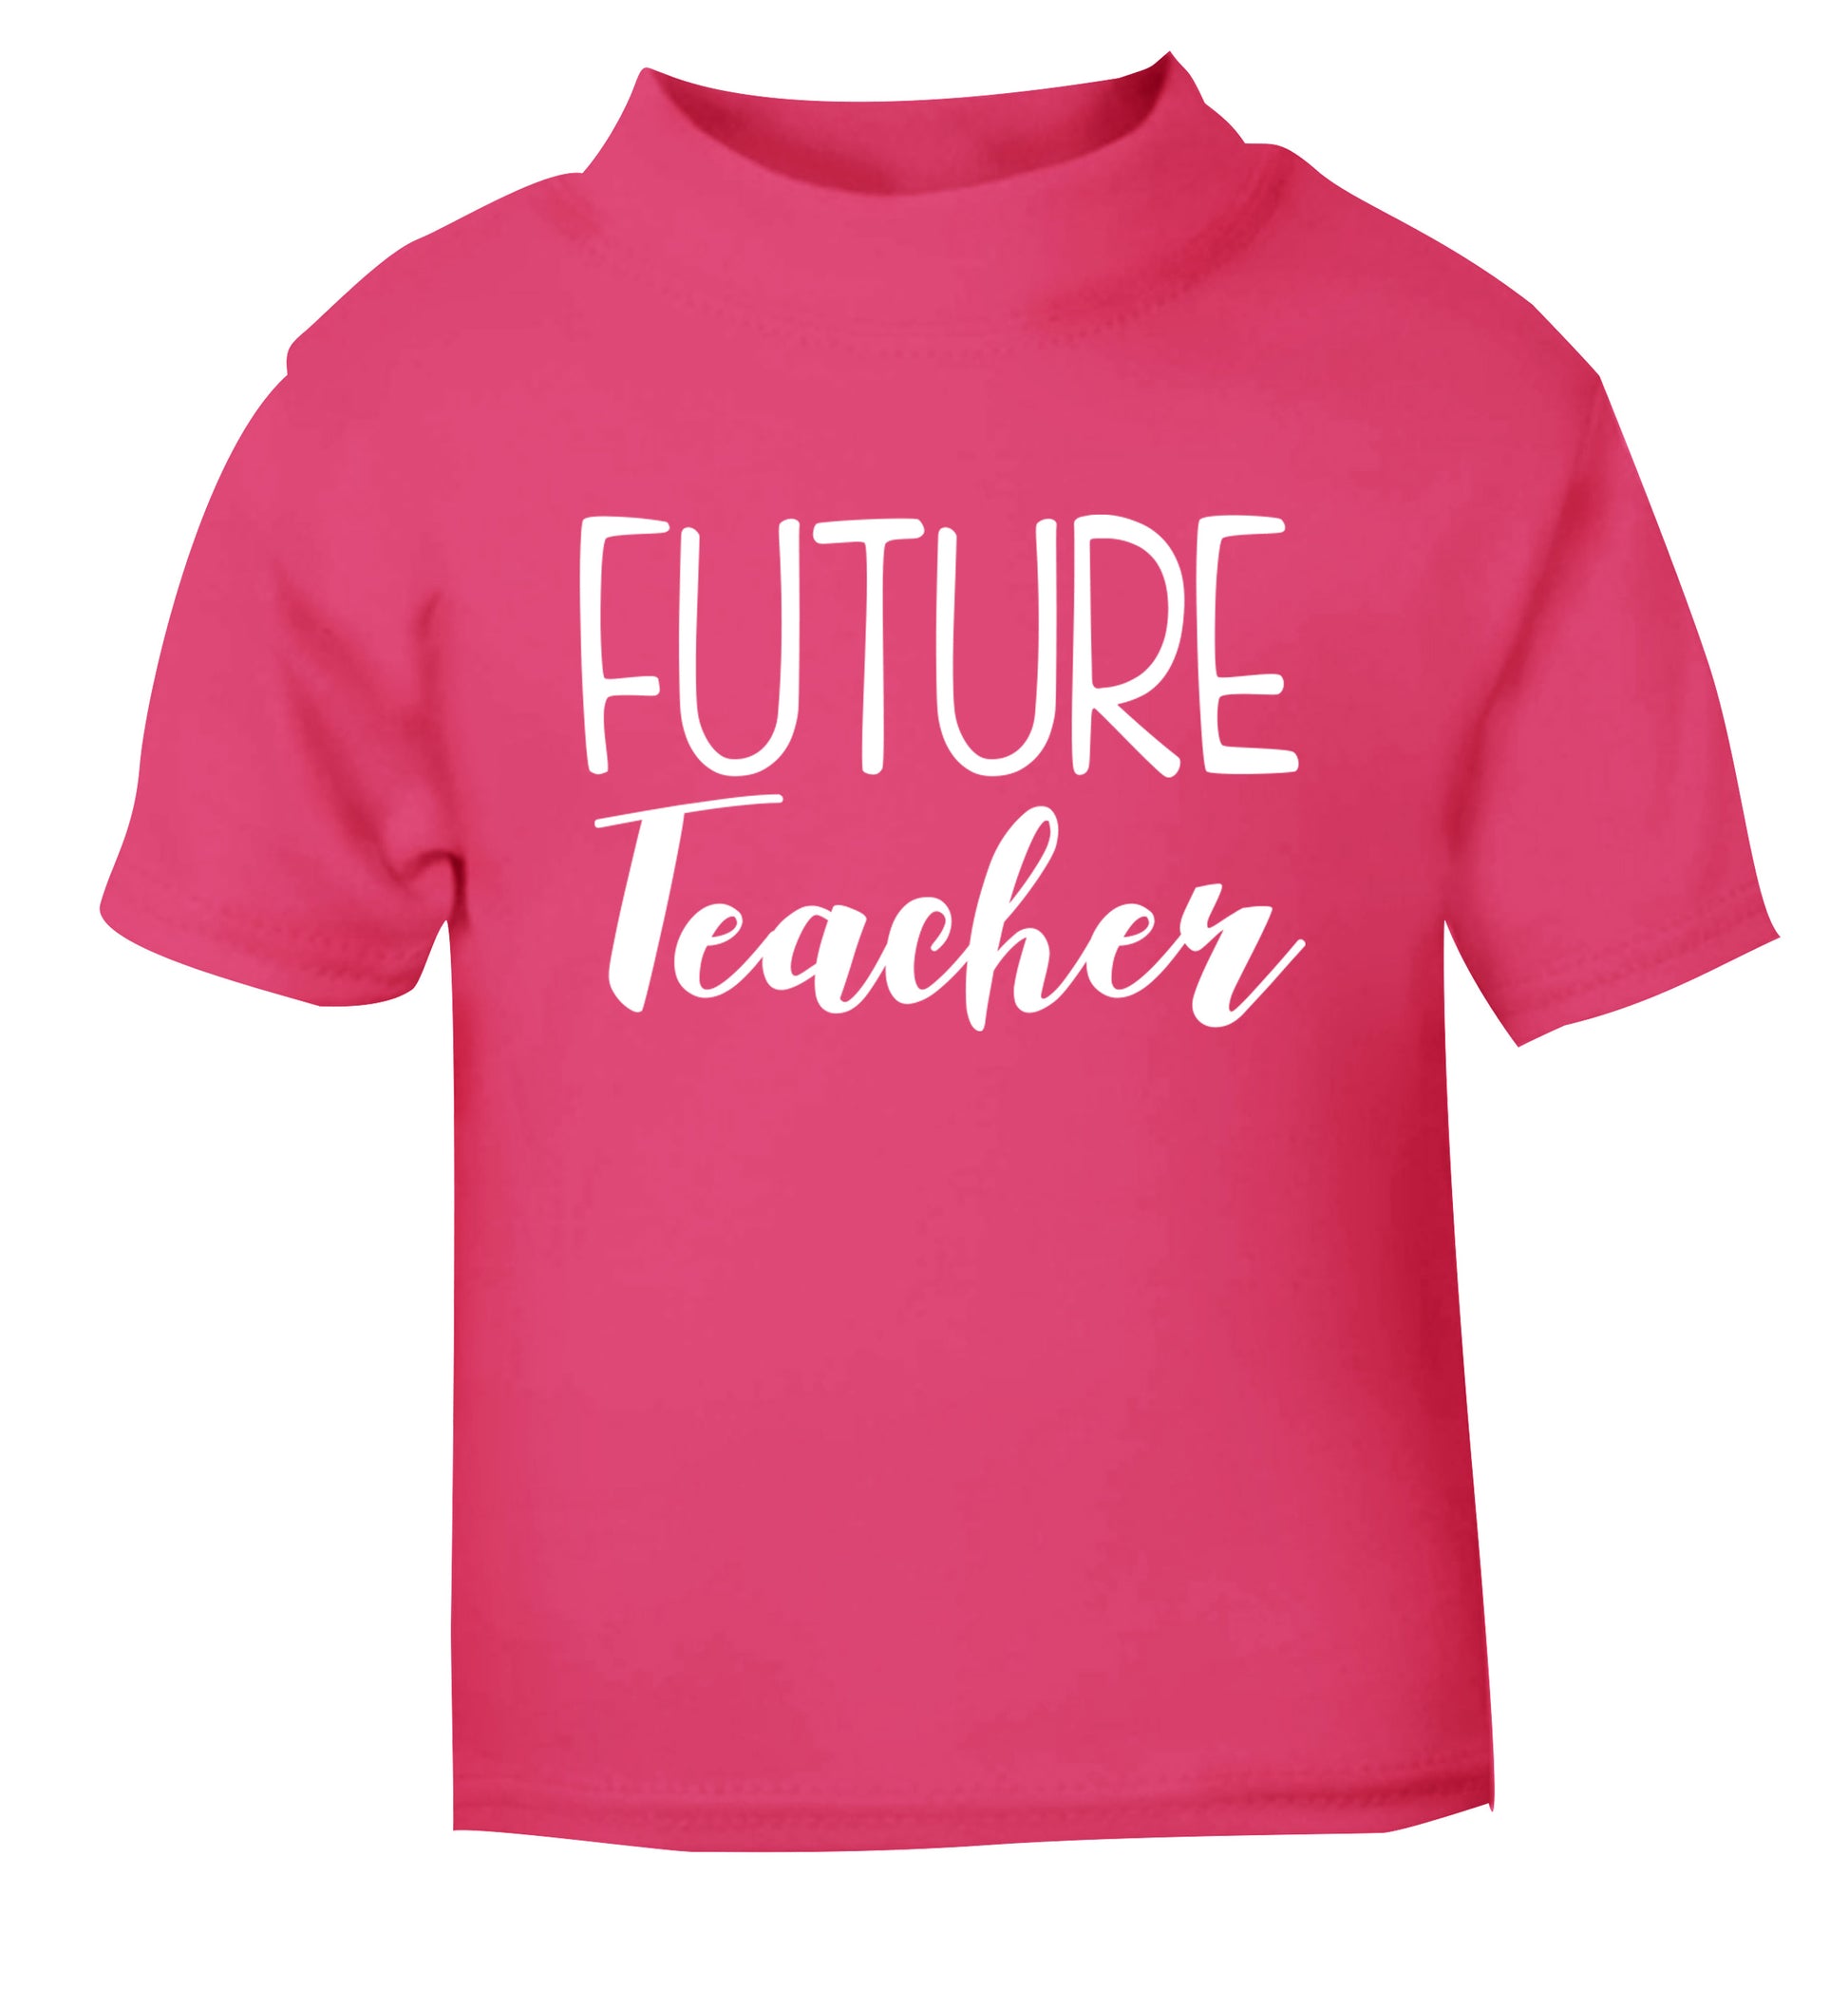 Future teacher pink Baby Toddler Tshirt 2 Years